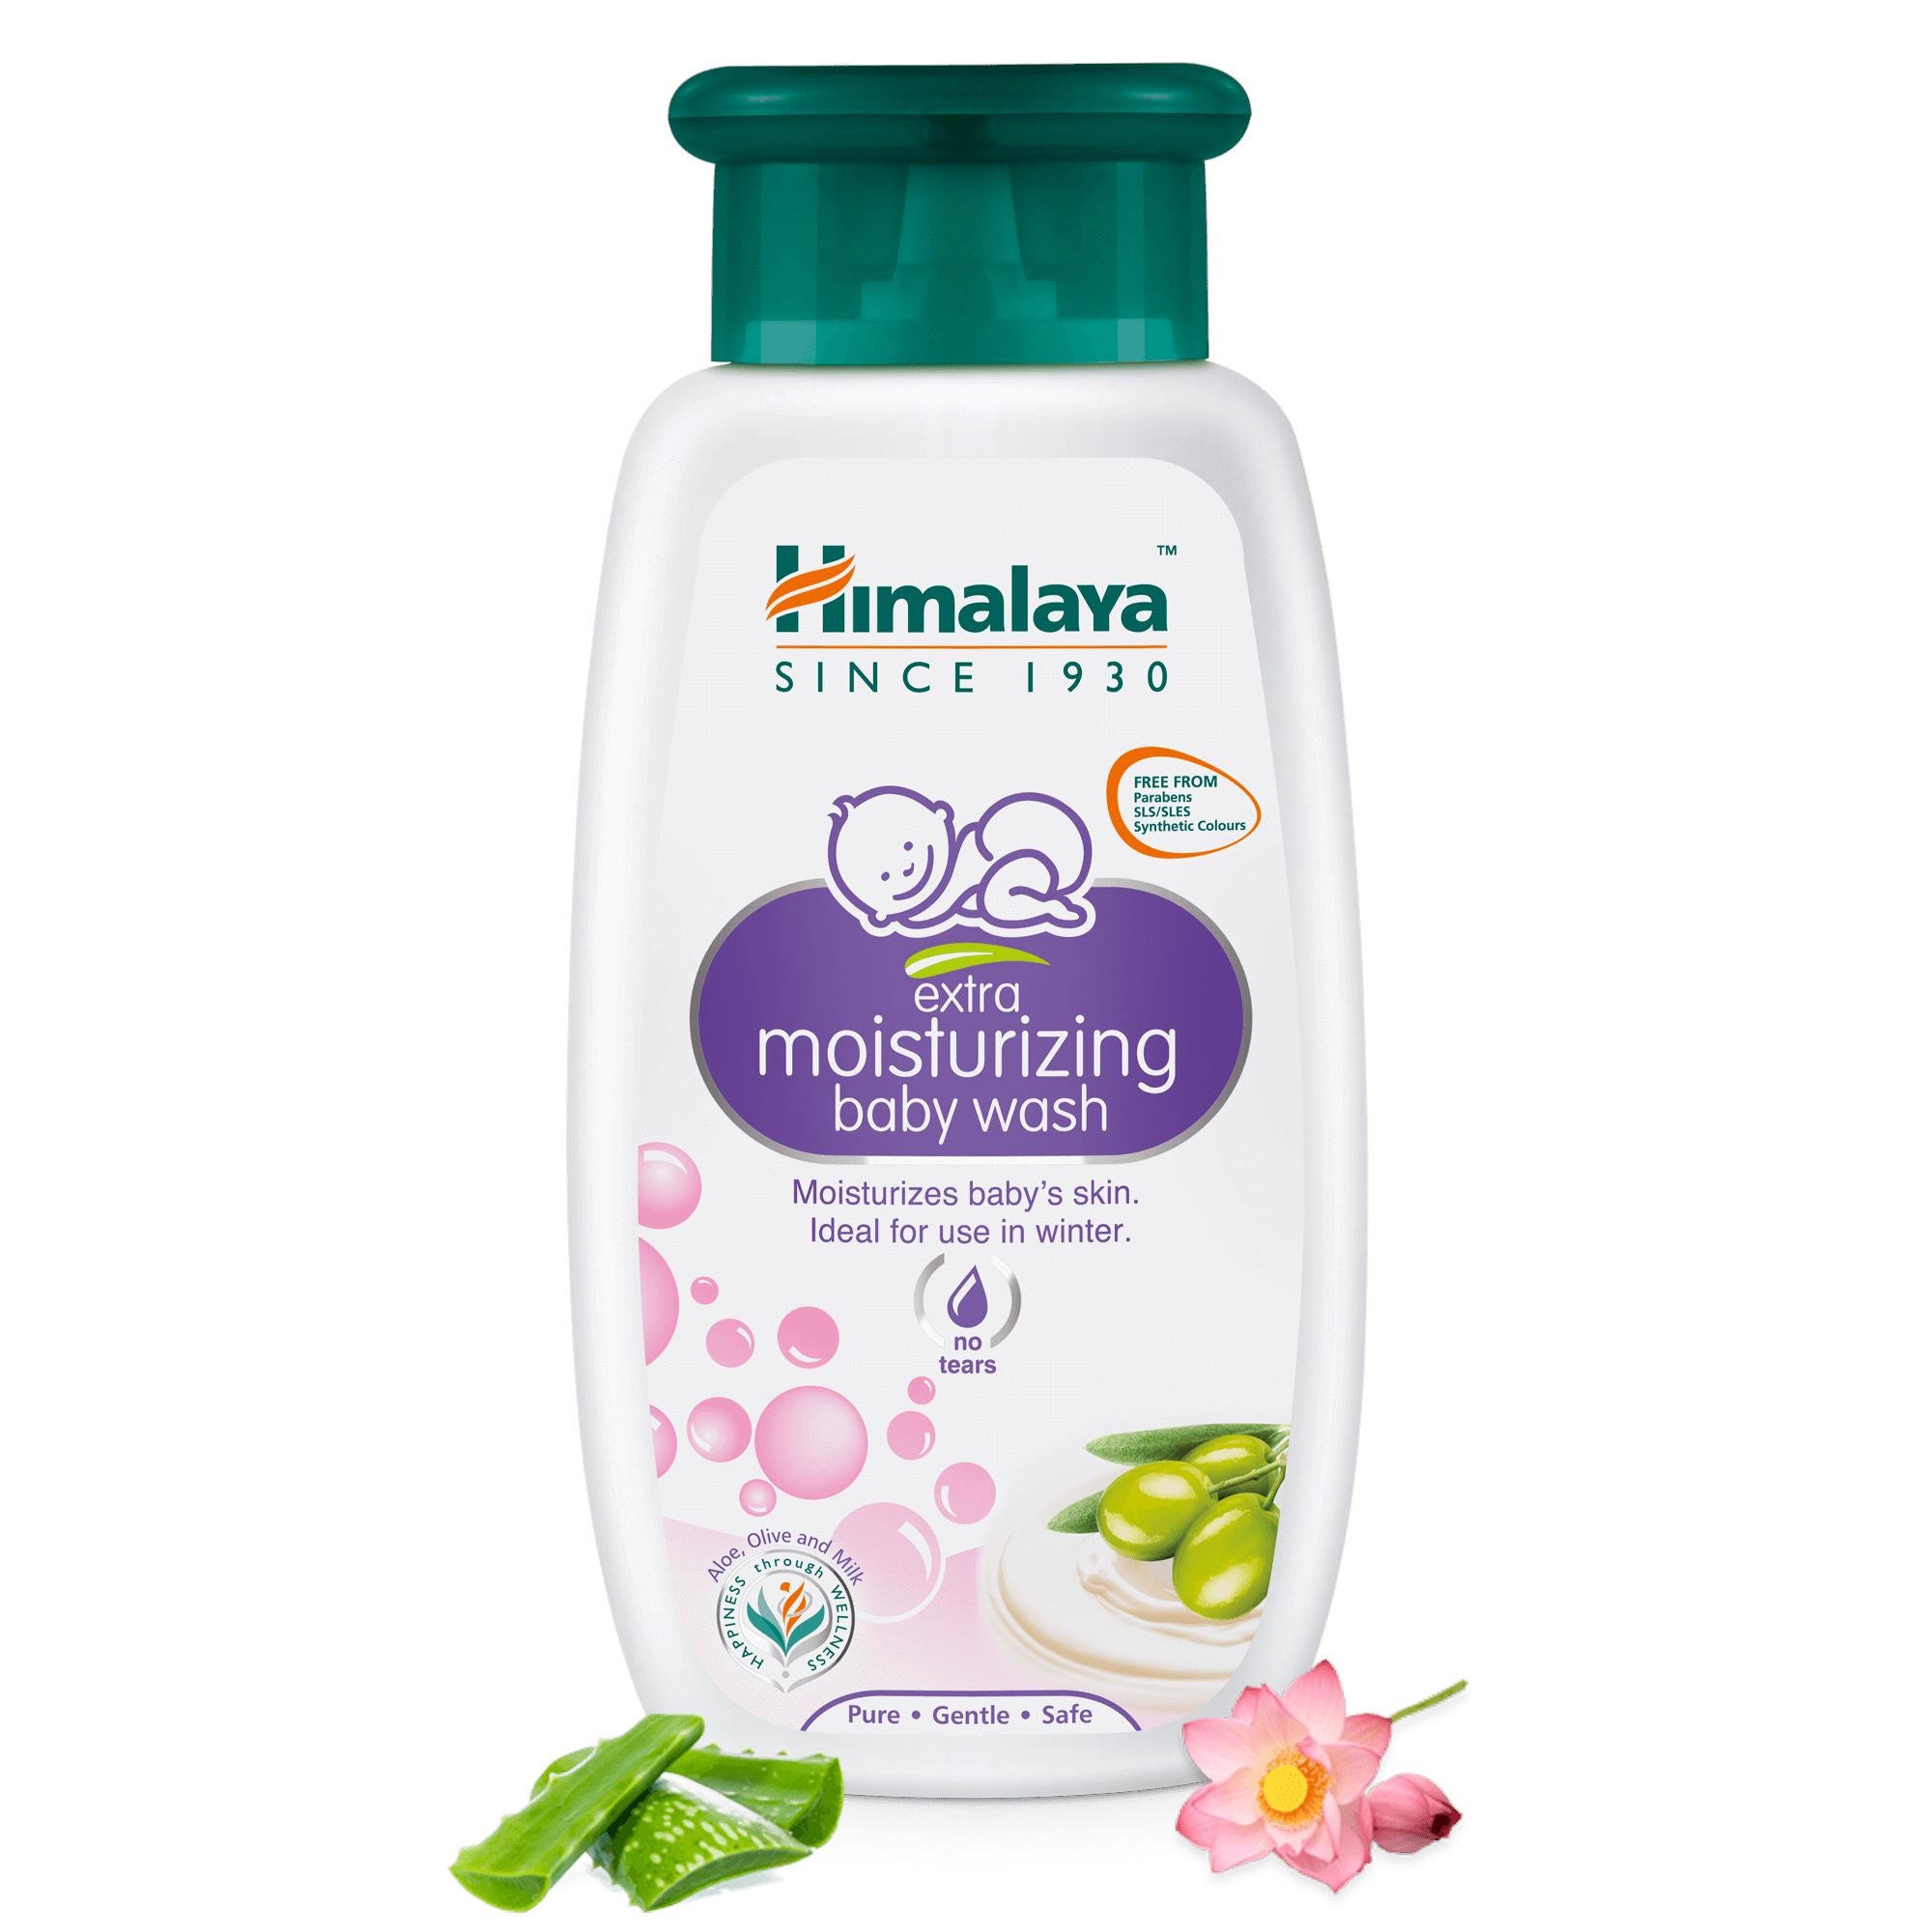 Himalaya extra moisturizing baby wash - Soothes and moisturizes baby's skin